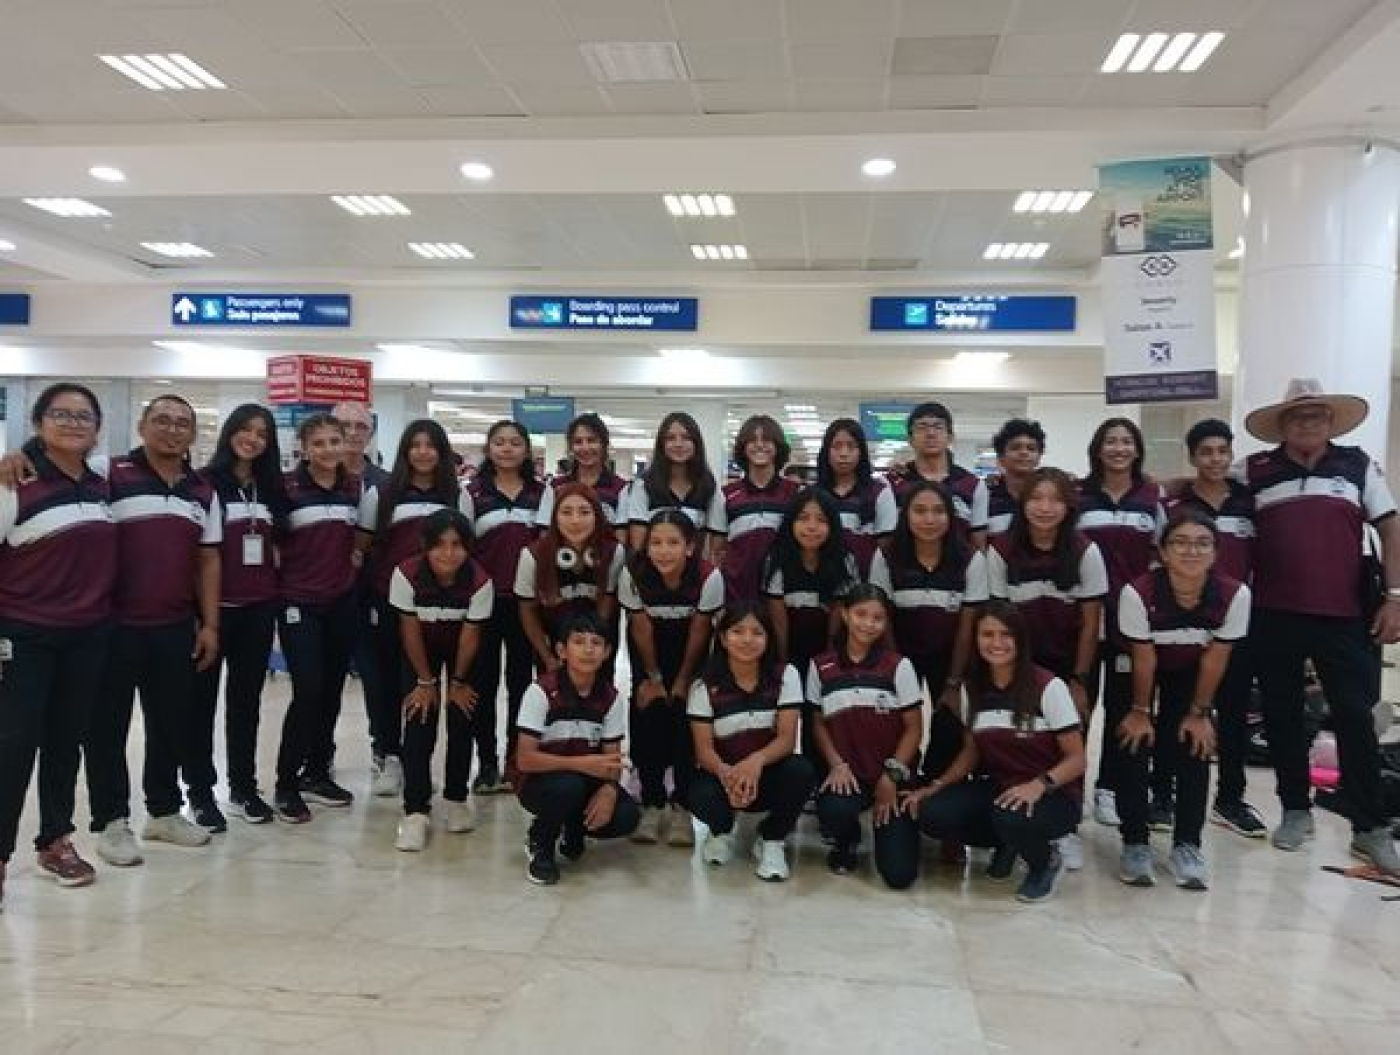 Arriba a Guadalajara la Selección de Quintana Roo en la disciplina de patines sobre ruedas